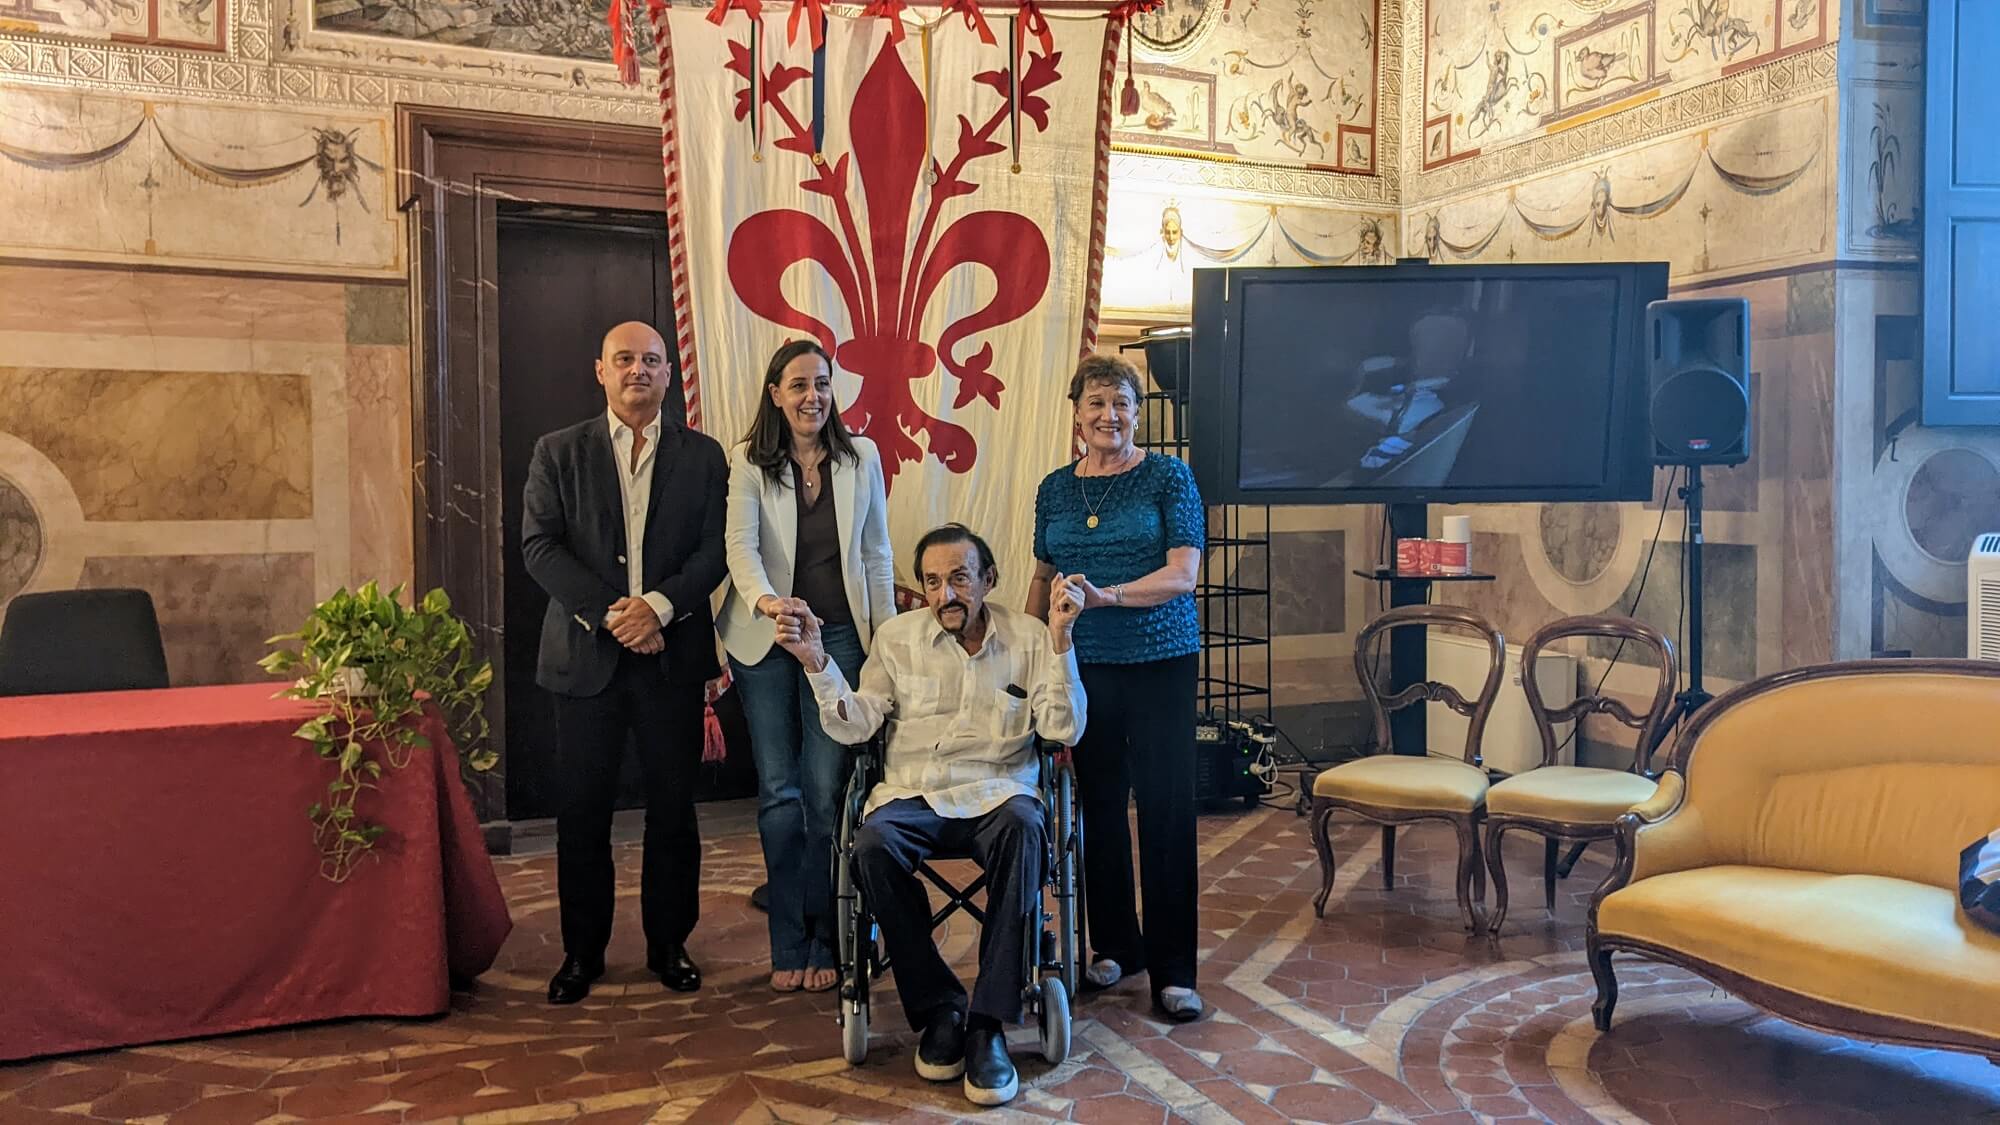 Philip Zimbardo and Christina Maslach visit Florence